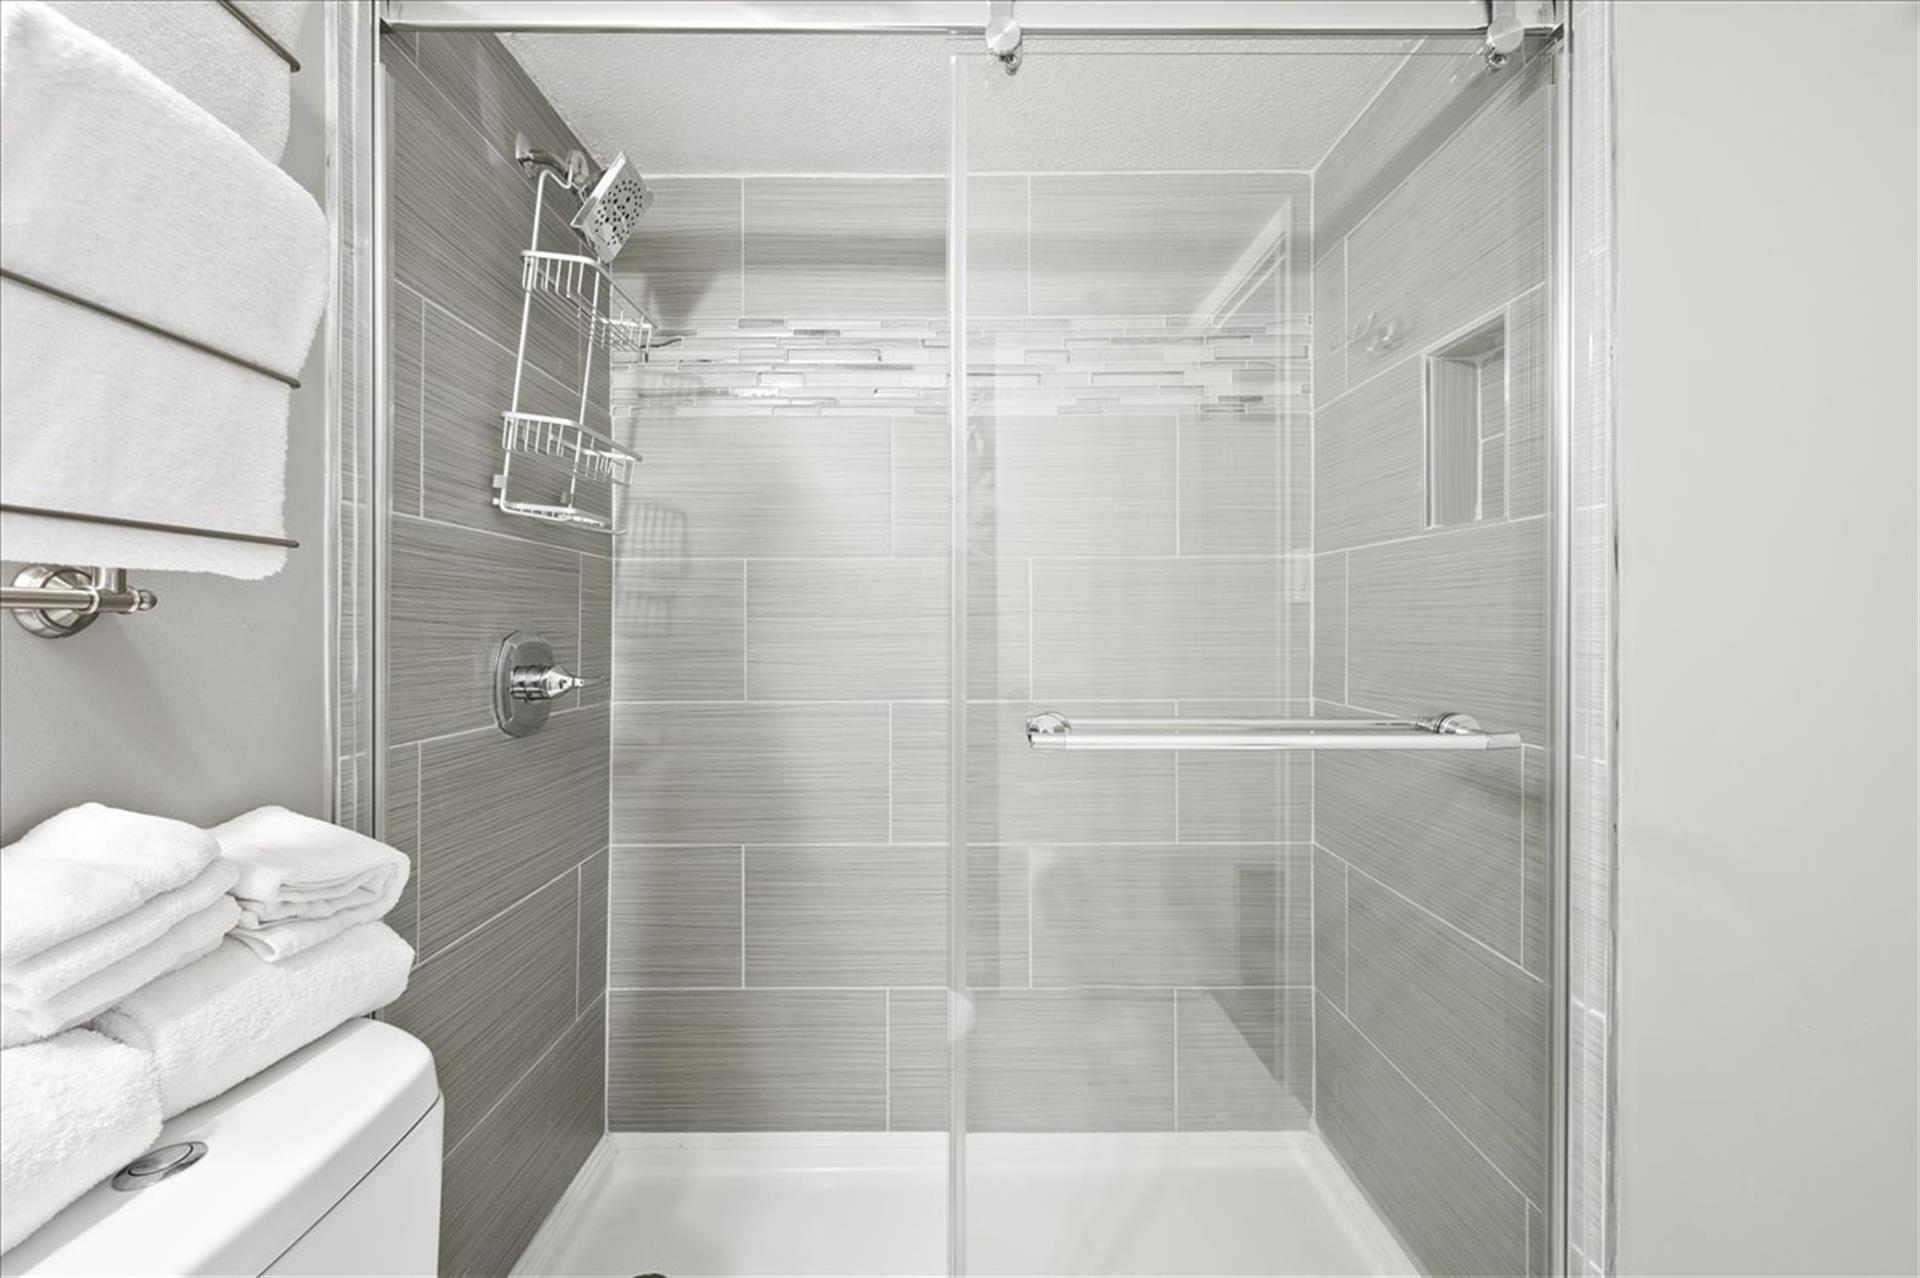 HSRC 620 Master Bathroom With WalkIn Shower